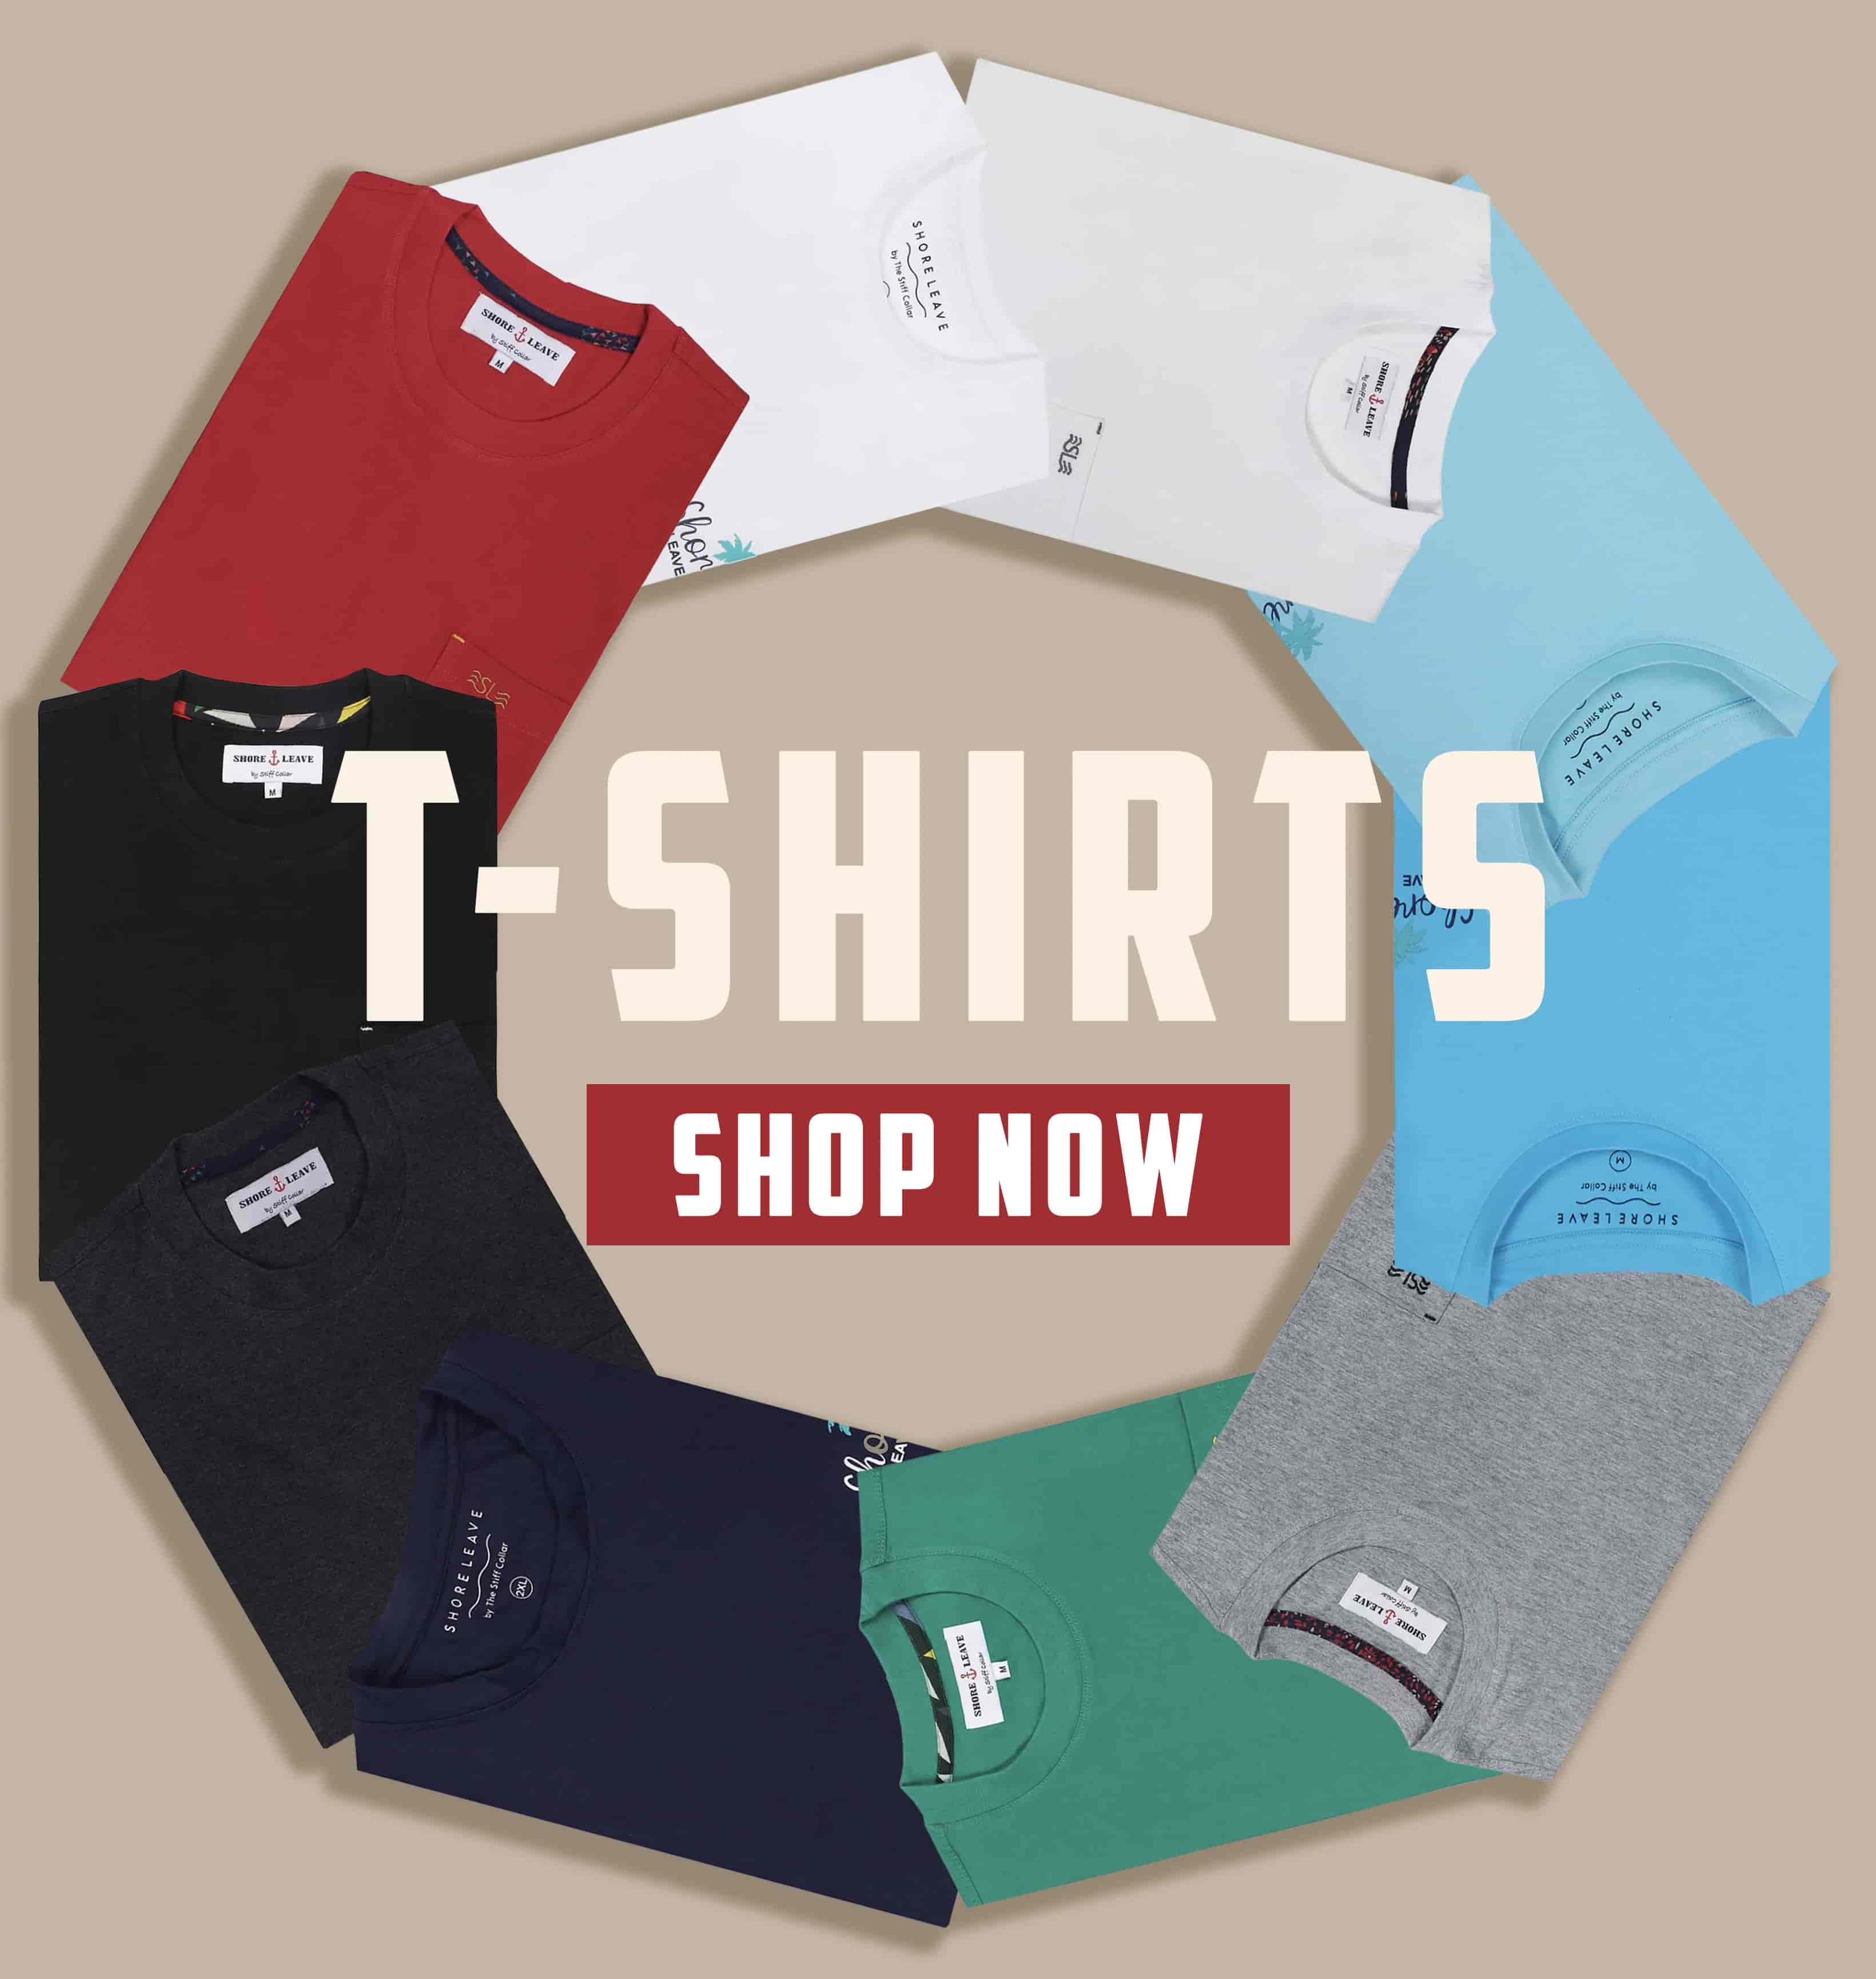 Cotton Shirts for Men | Buy Shirts Online India - Thestiffcollar